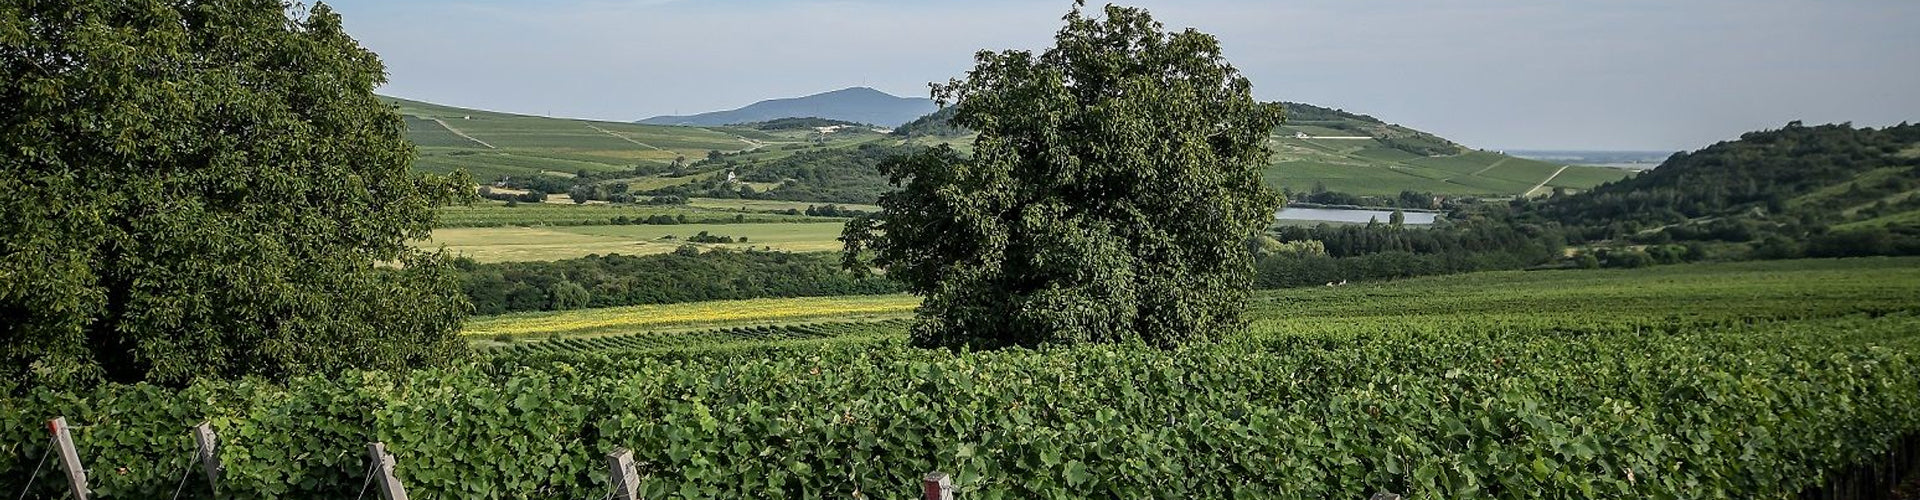 Dobogó Vineyards in Tokaji, Hungary